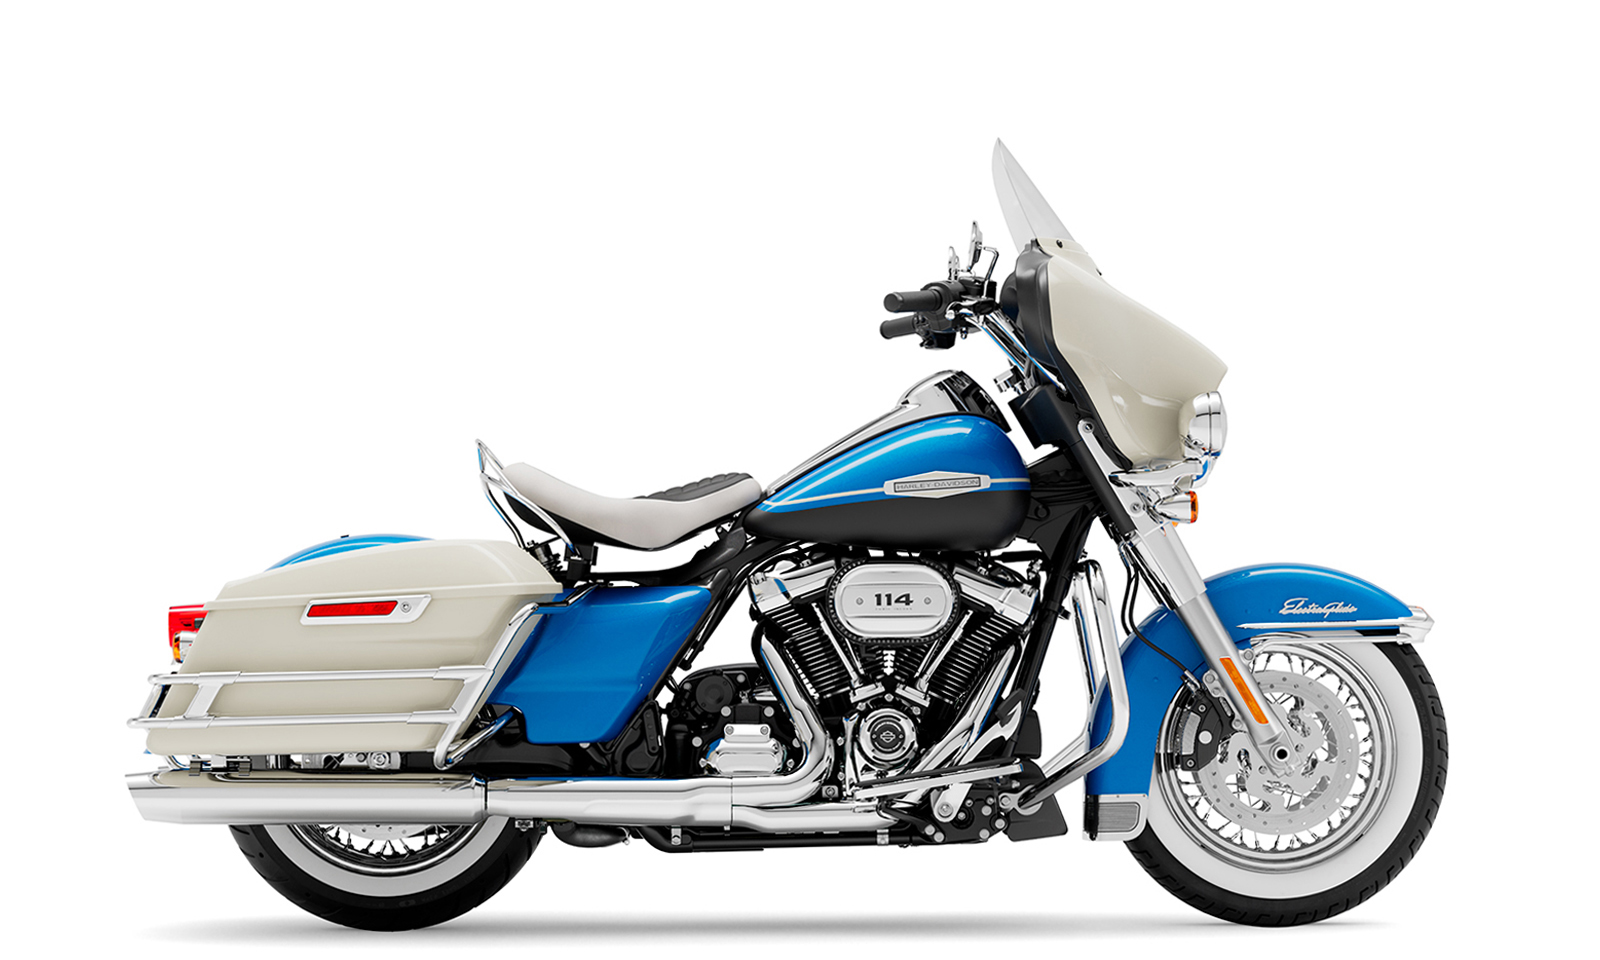 2021 Electra Glide Revival Motorcycle Harley Davidson Canada